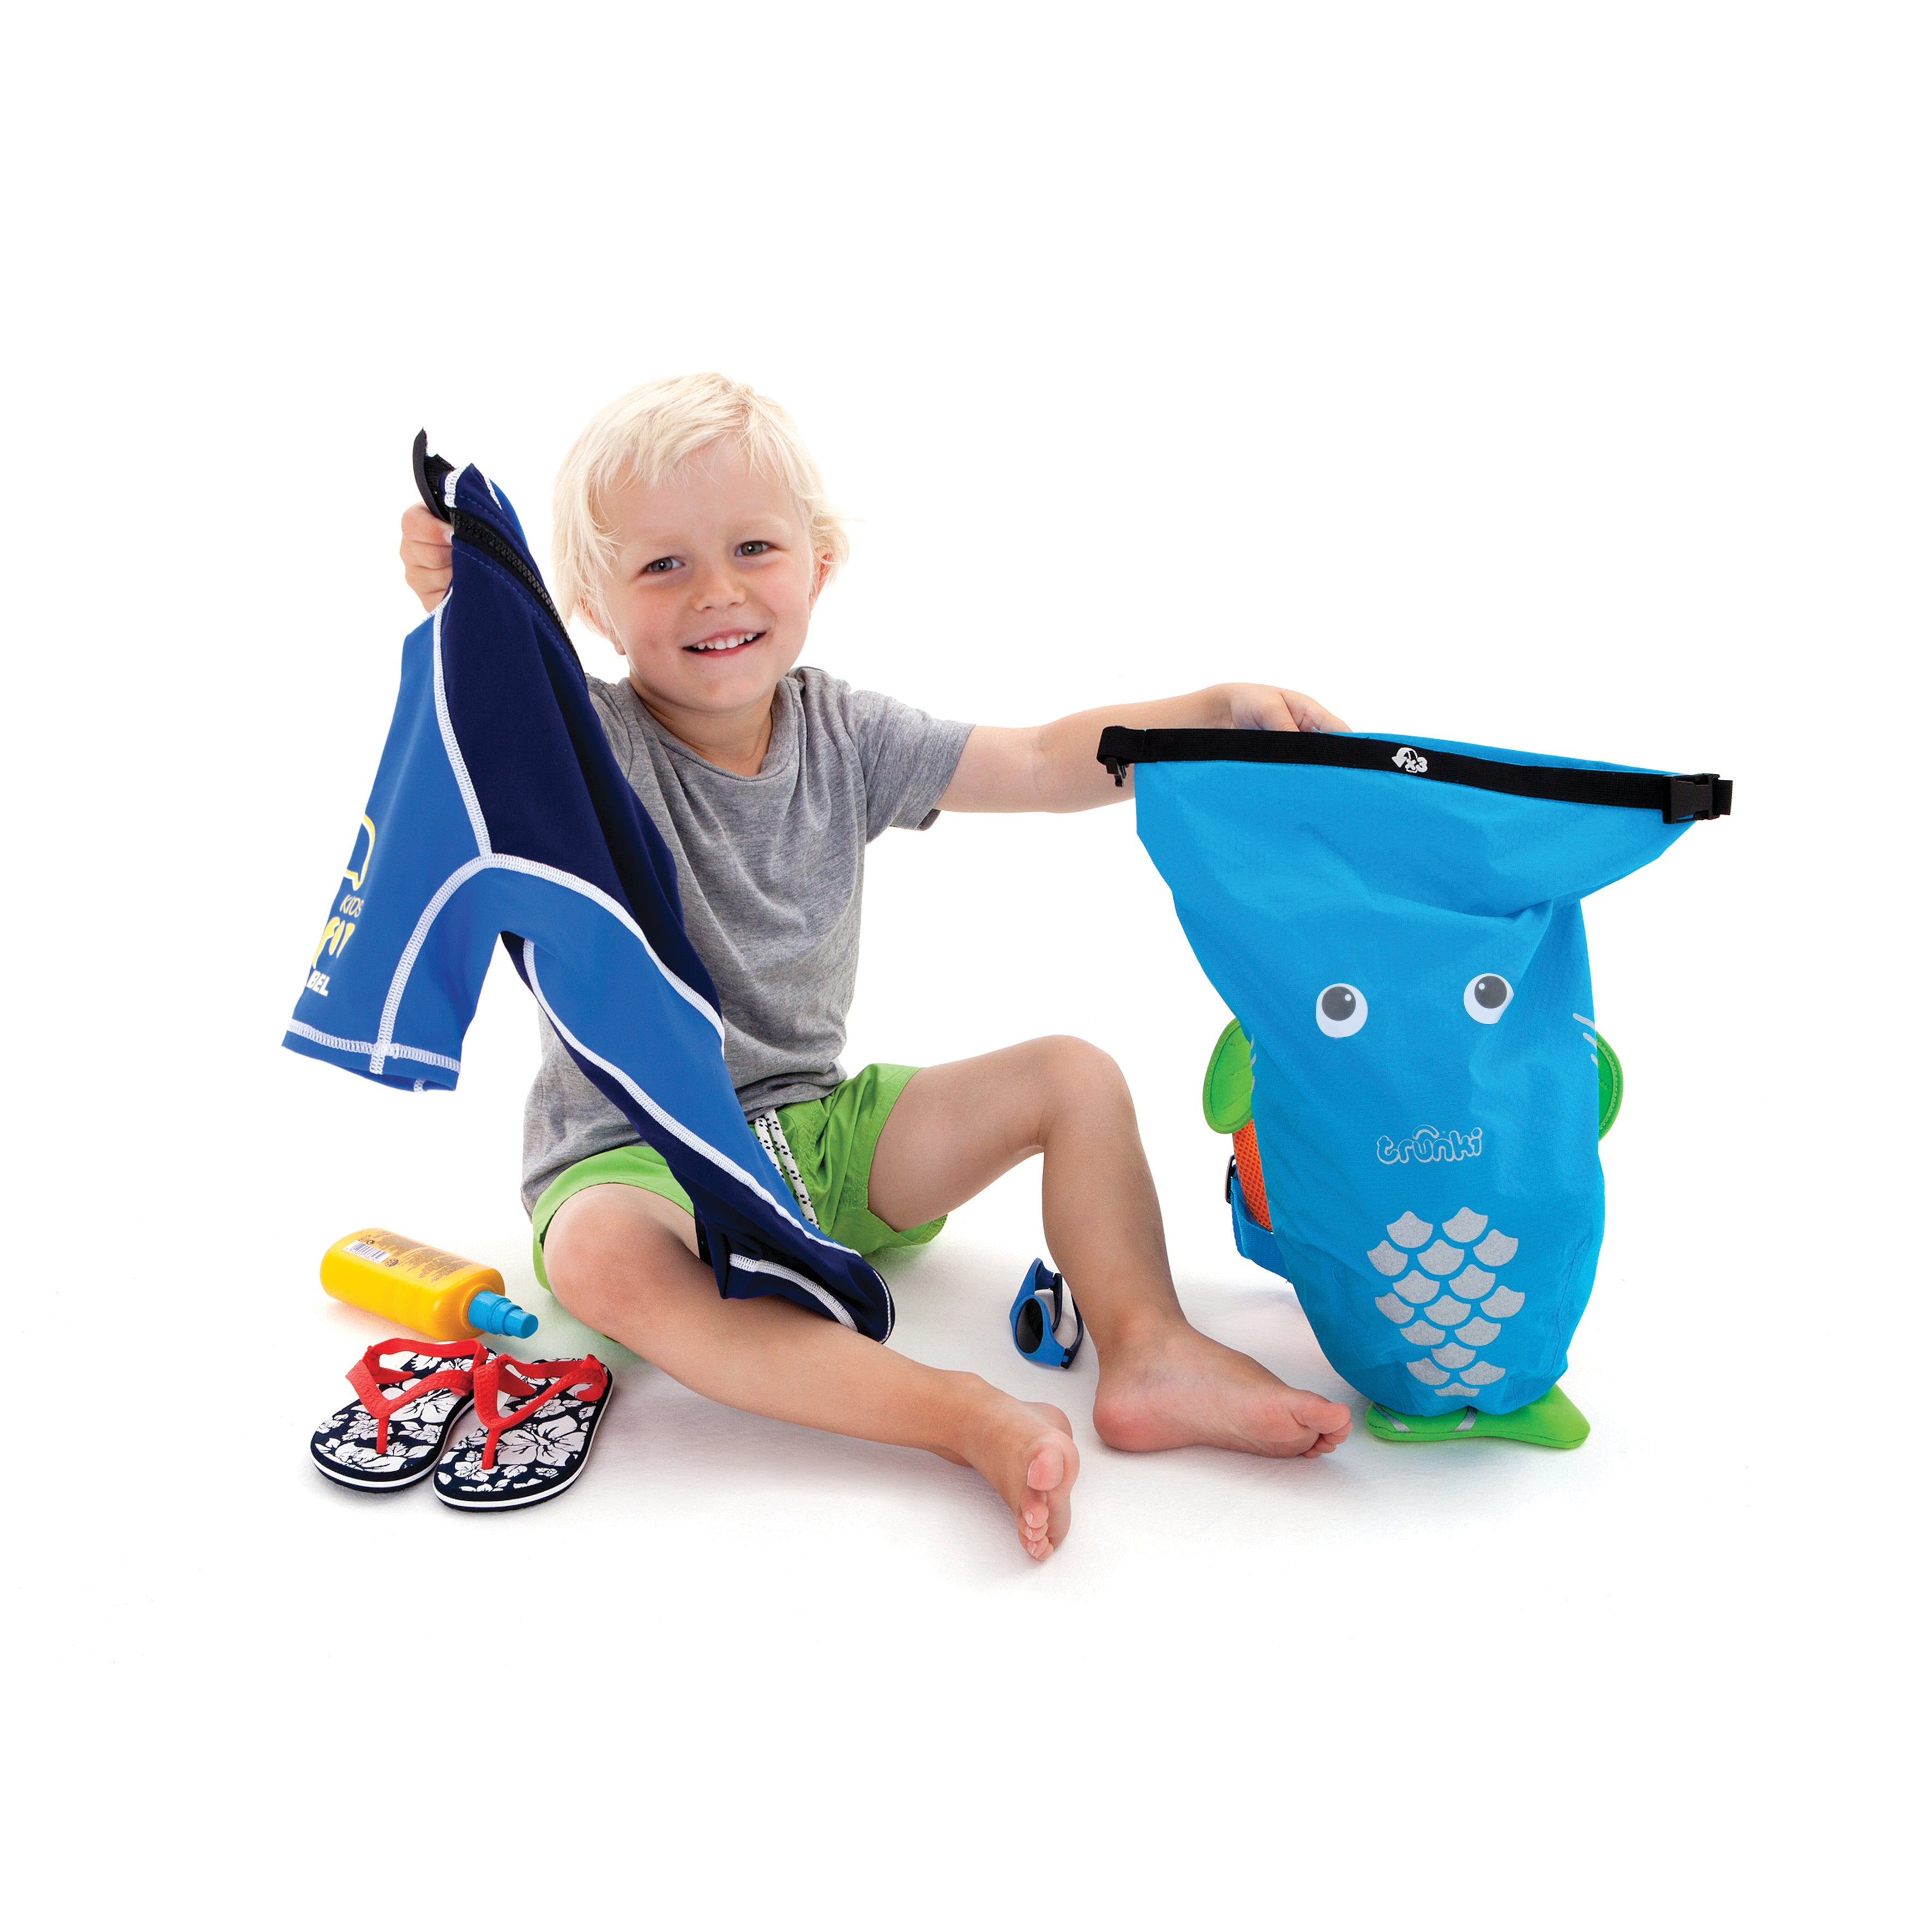 Trunki PaddlePak - Blue, Water Resistent Kid's Backpack